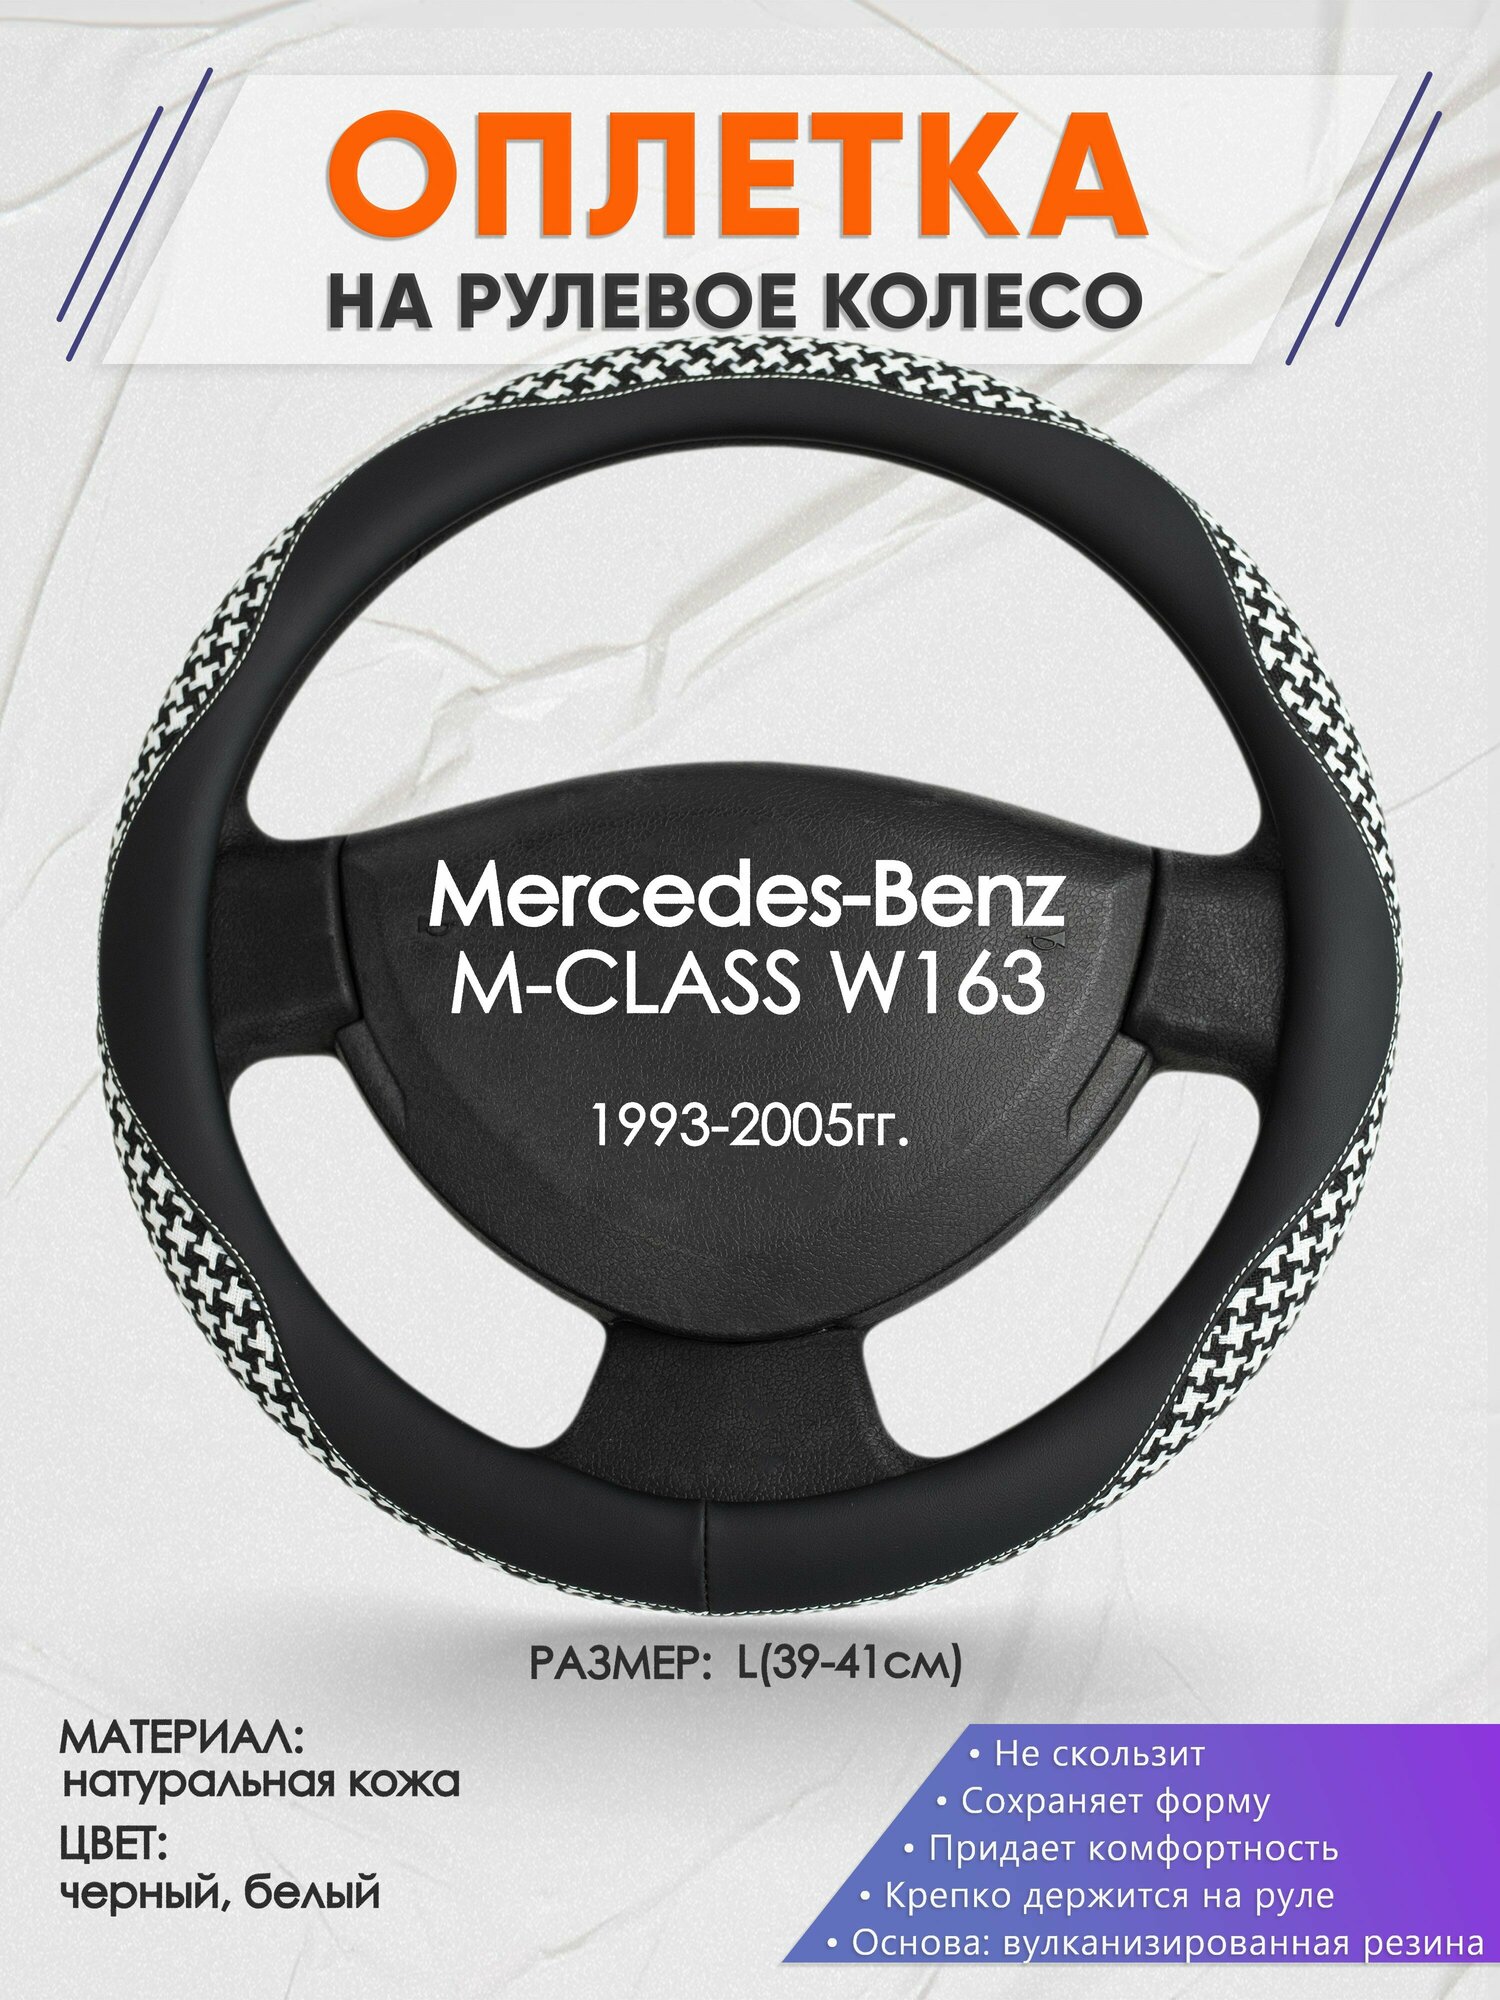 Оплетка на руль для Mercedes-Benz M-CLASS W163(Мерседес Бенц М Класс) 1993-2005, L(39-41см), Натуральная кожа 21